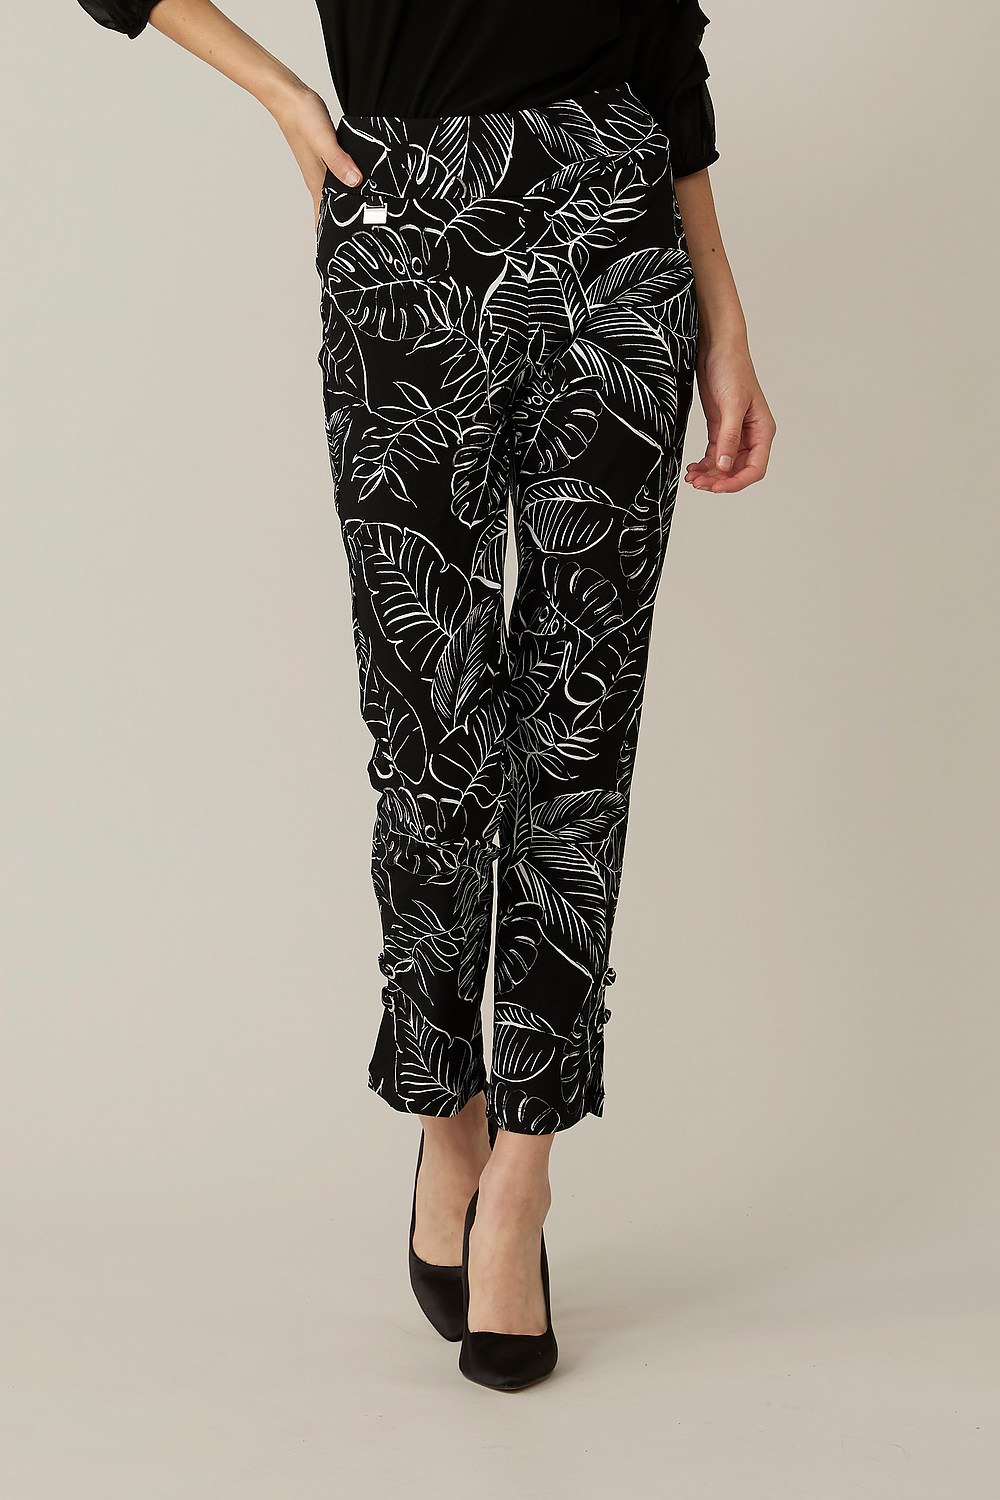 Joseph Ribkoff Palm Print Cropped Pants Style 221132. Black/vanilla